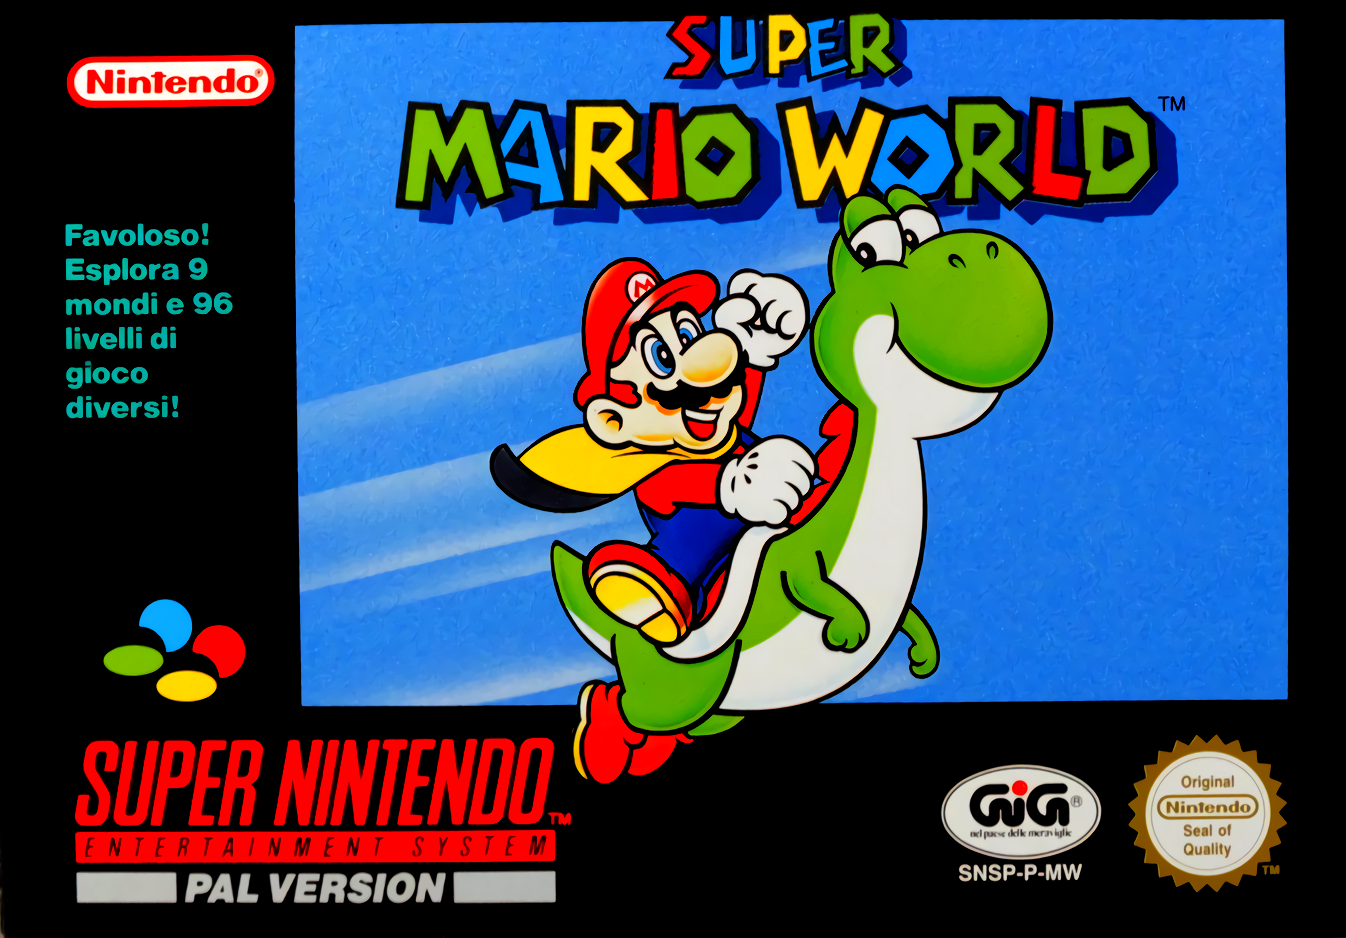 Hack~ Super Mario World: 2 Player Co-Op Quest! (SNES